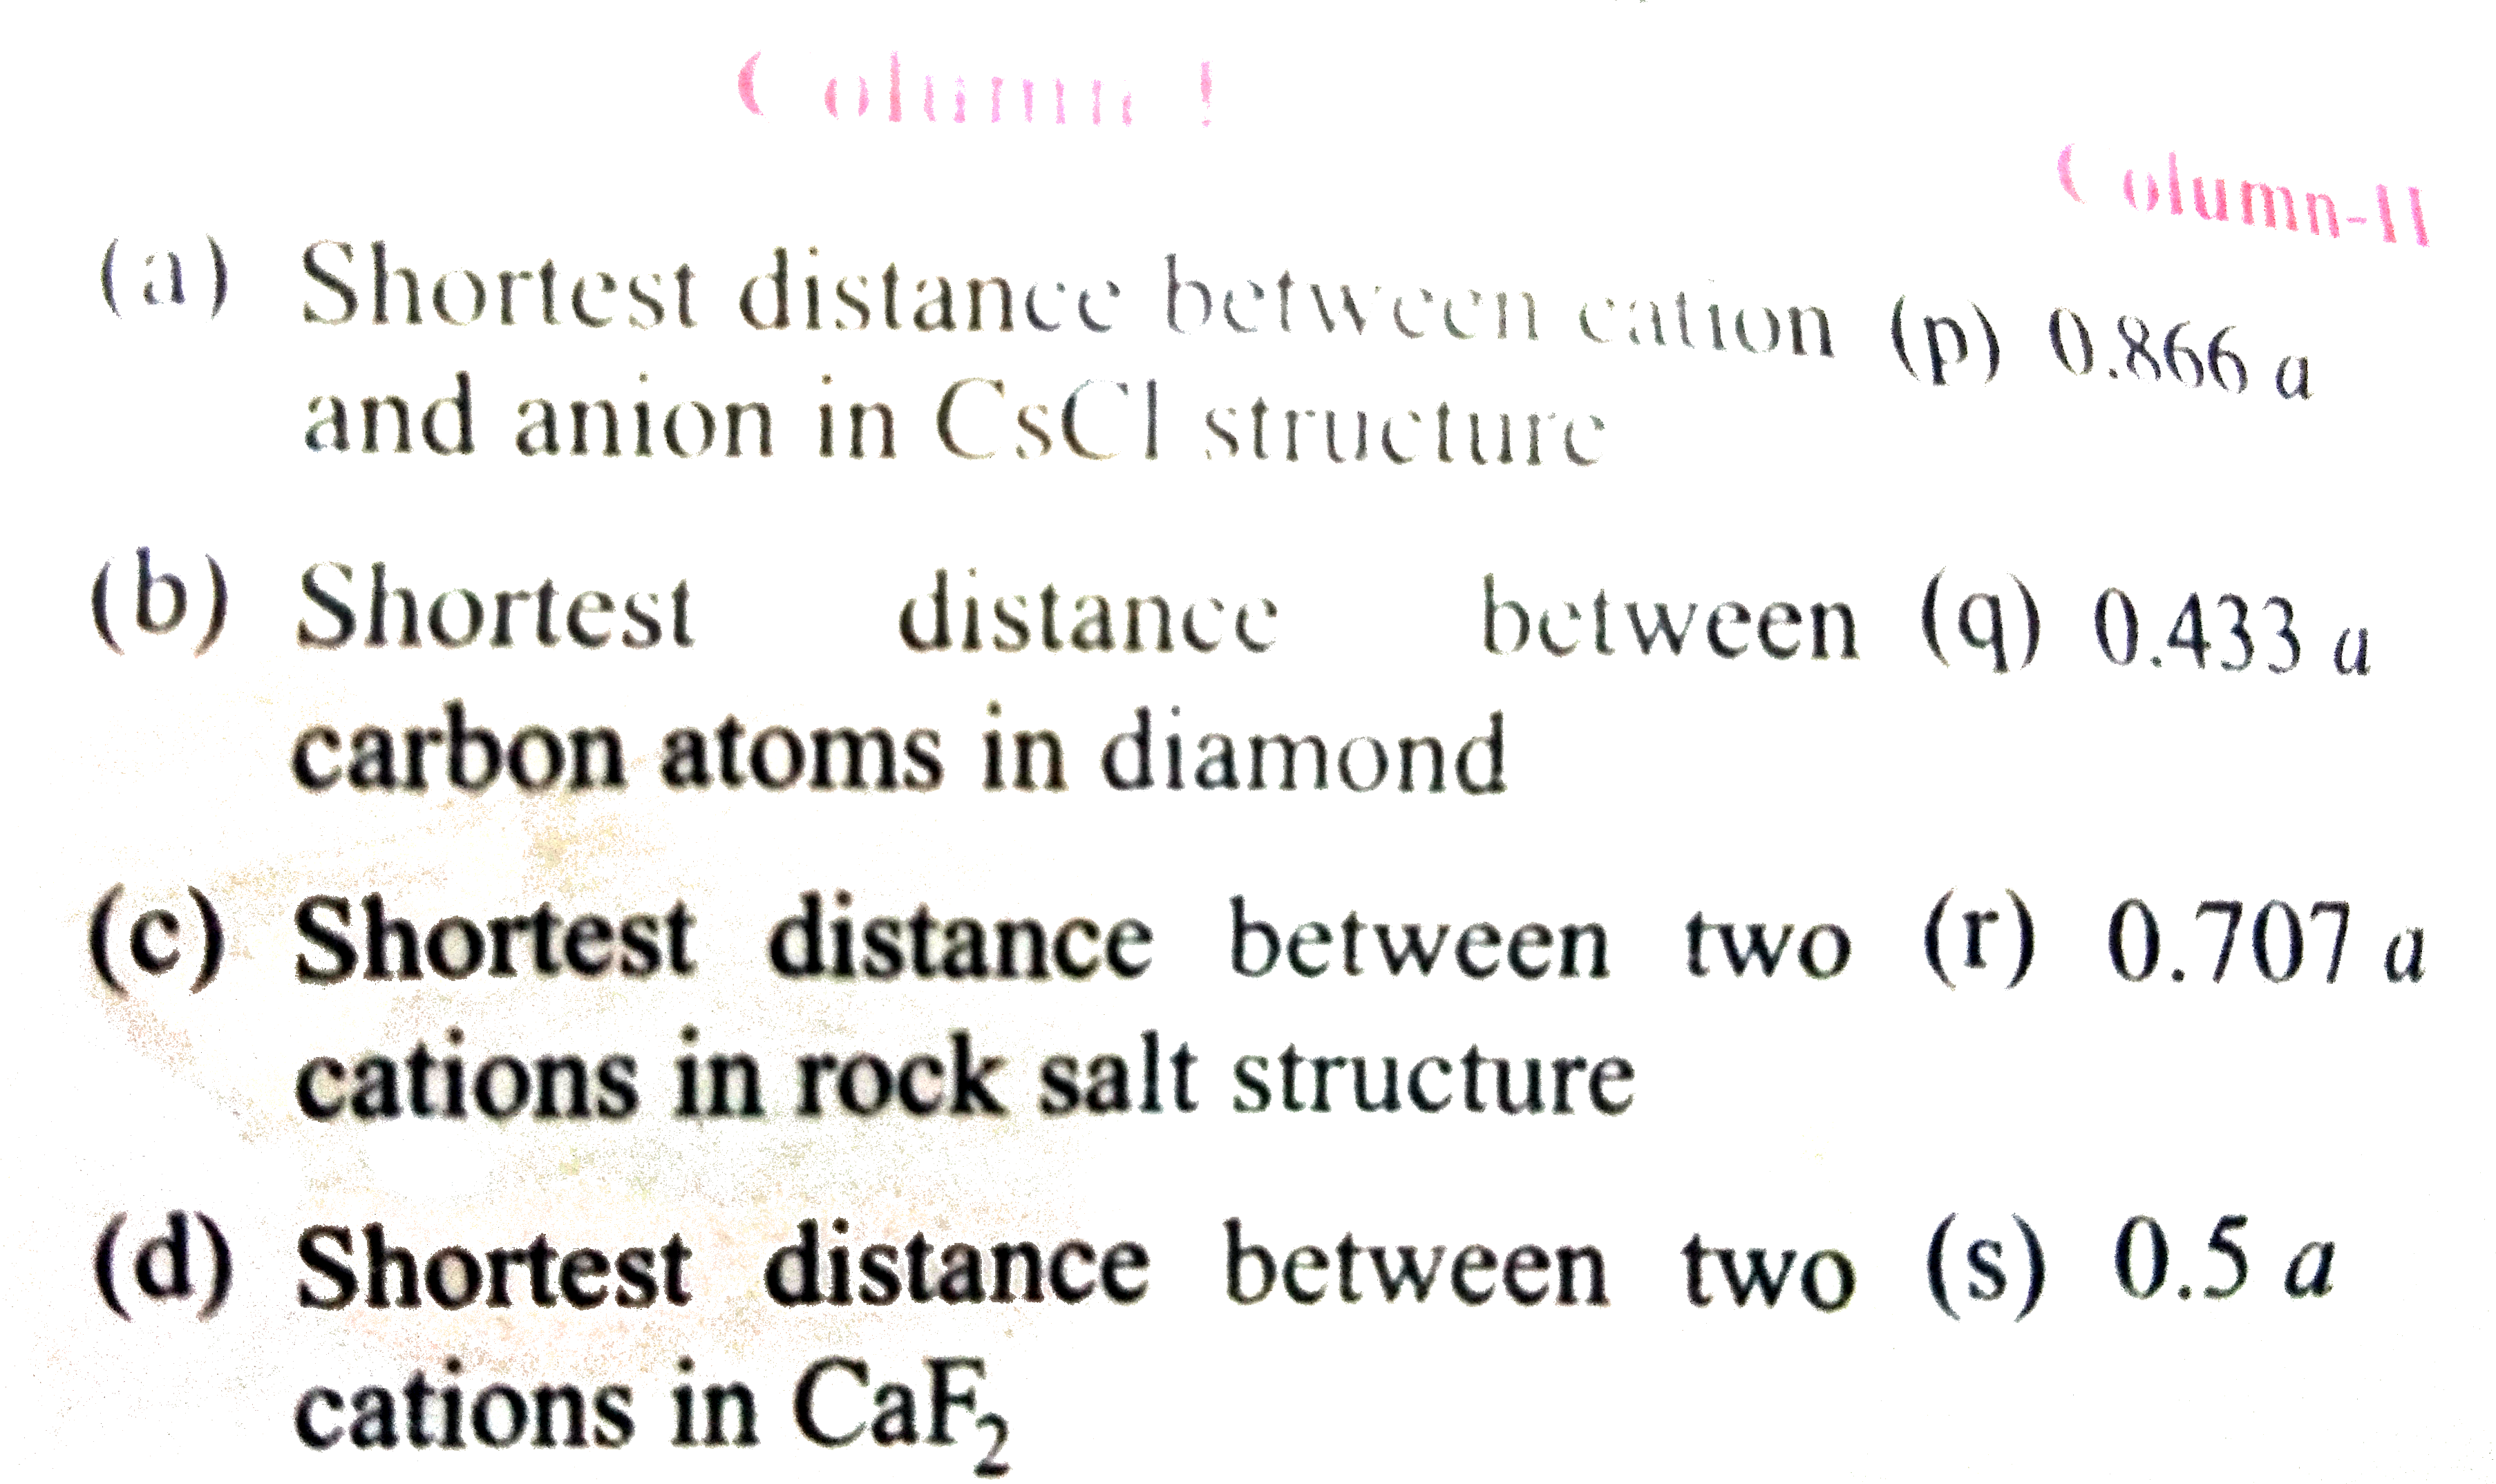 Match the Column-I with Column-II